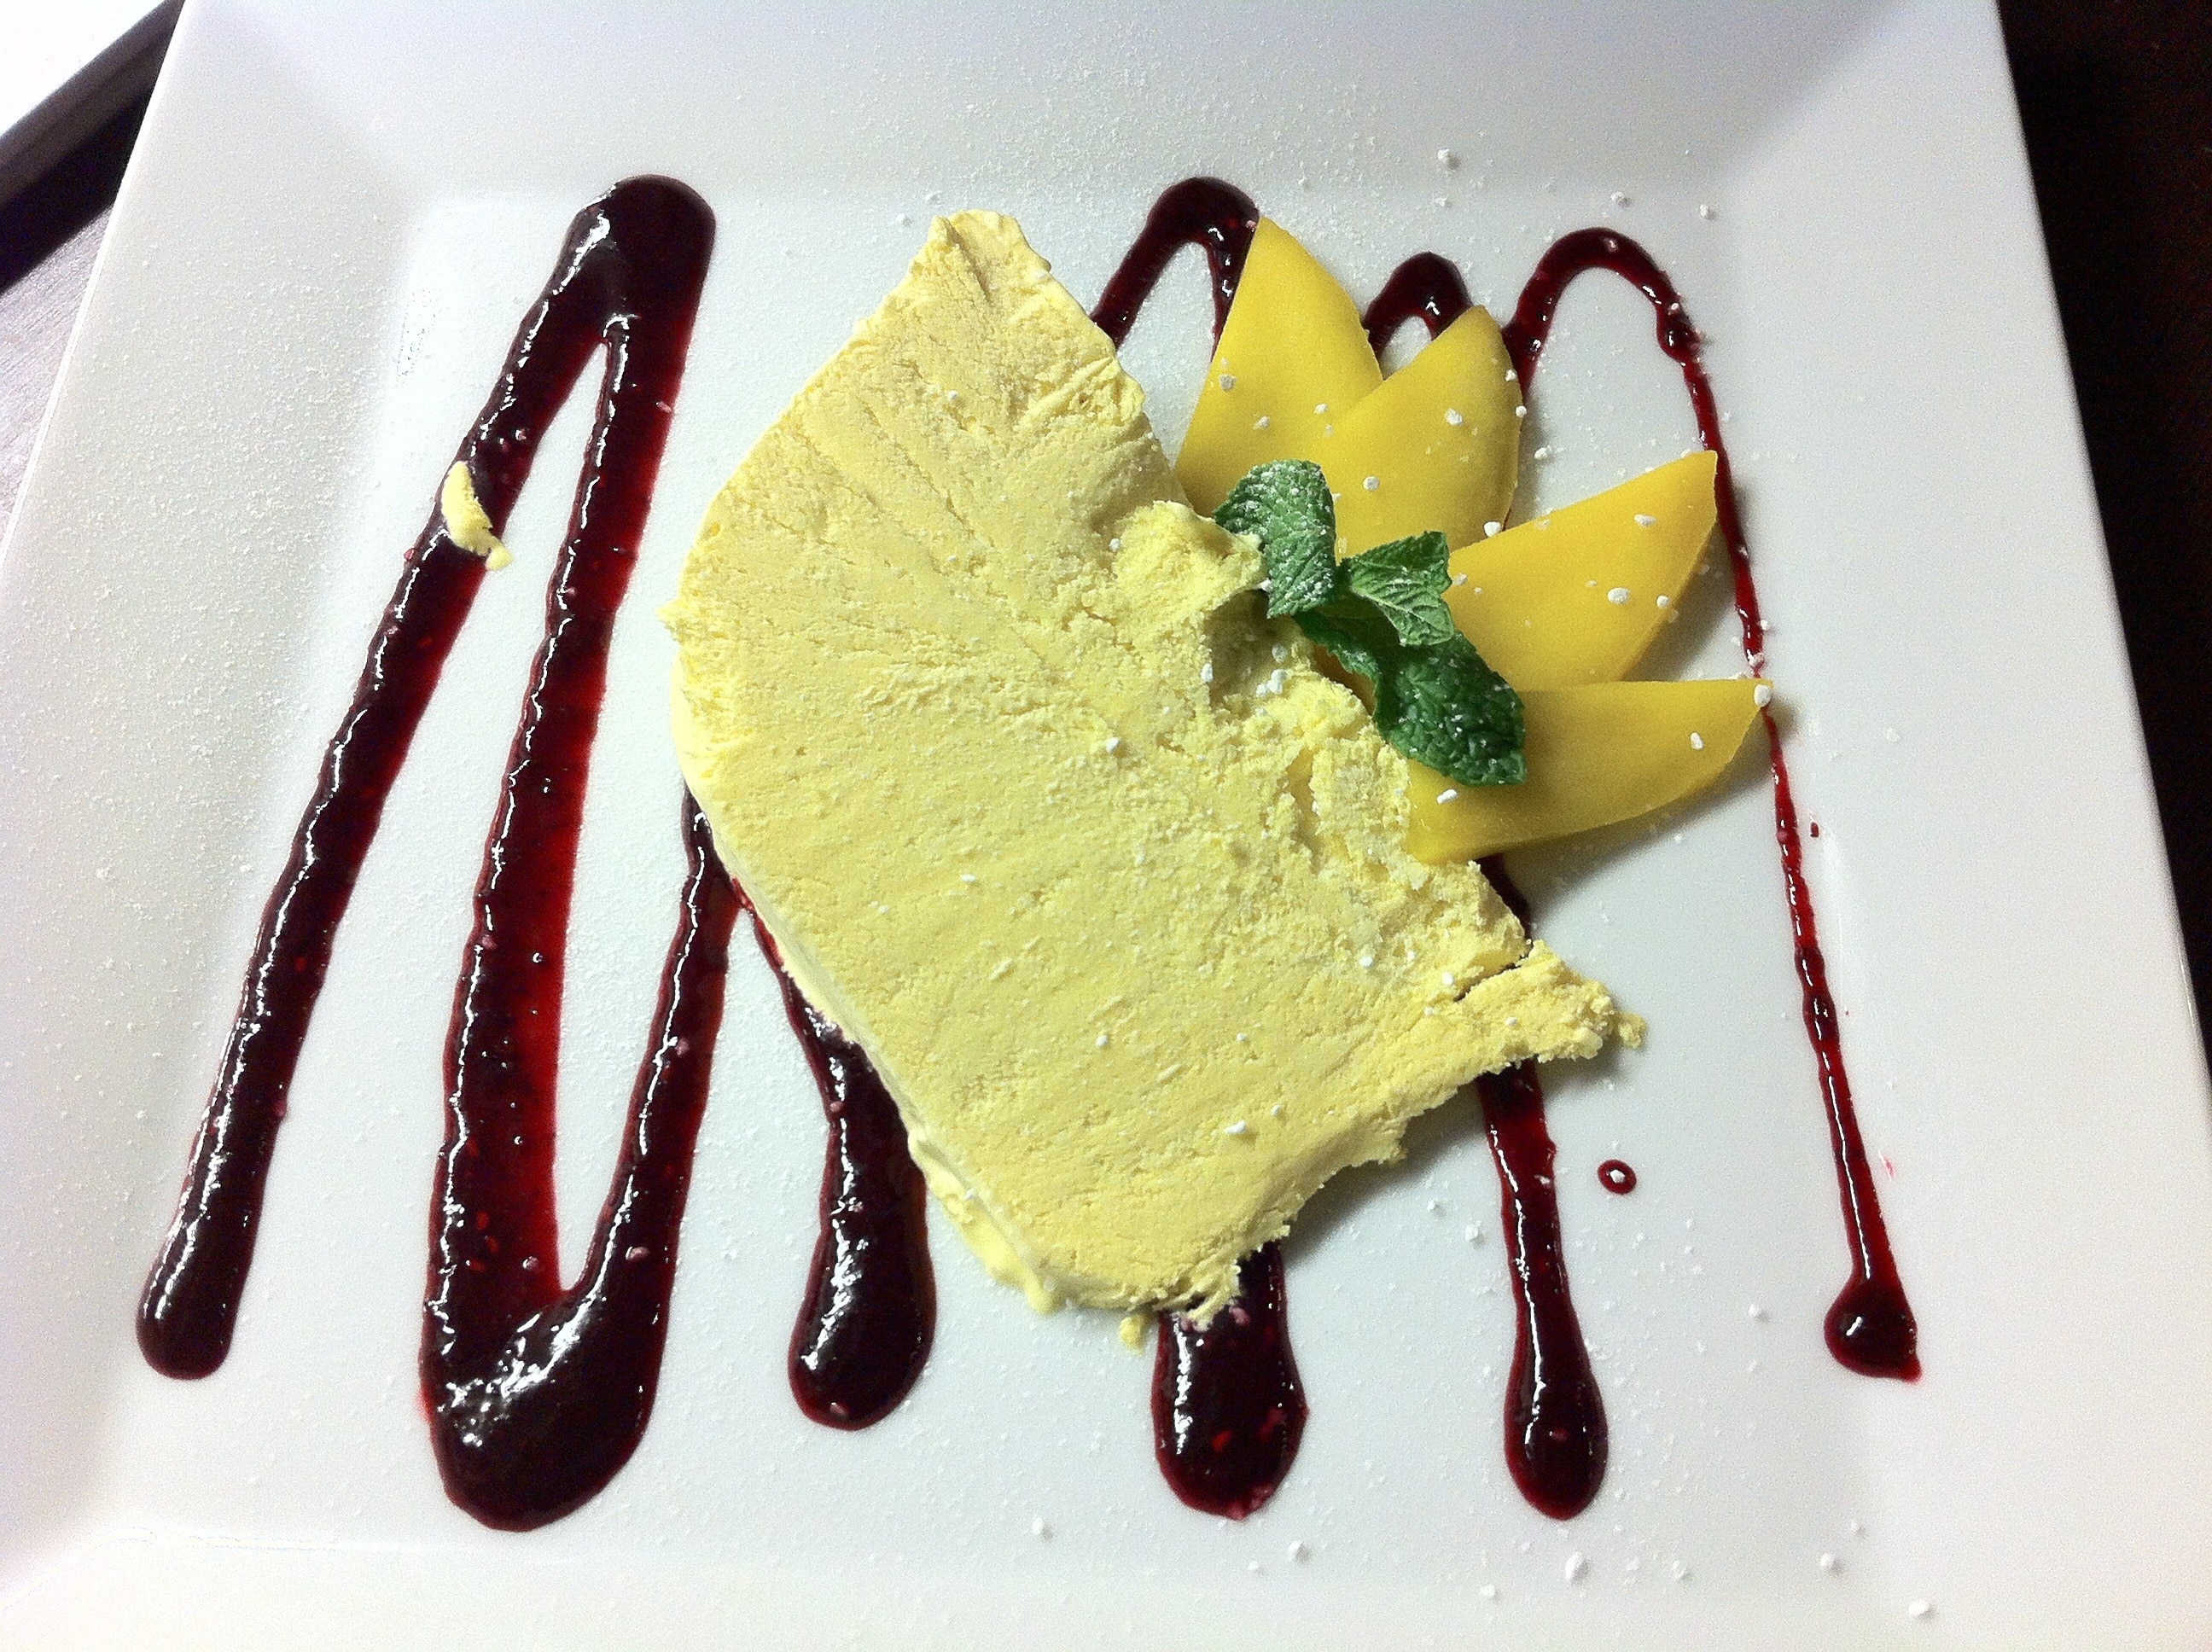 yellow crepe dessert pastry in white ceramic plate